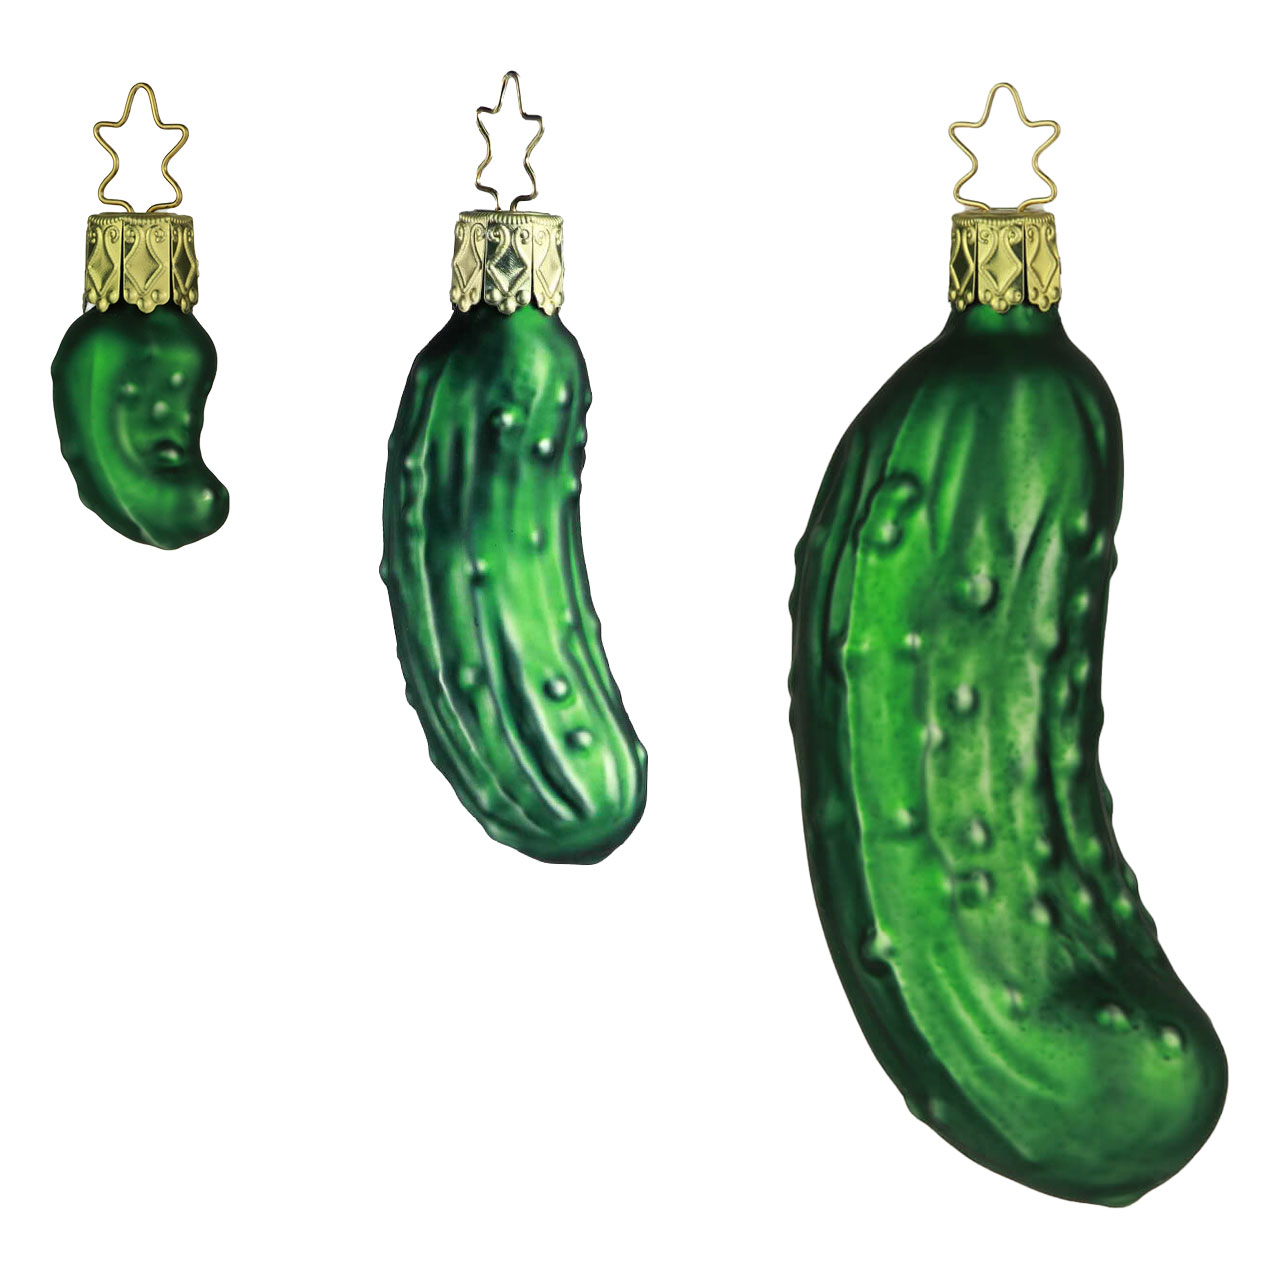 Christmas cucumbers